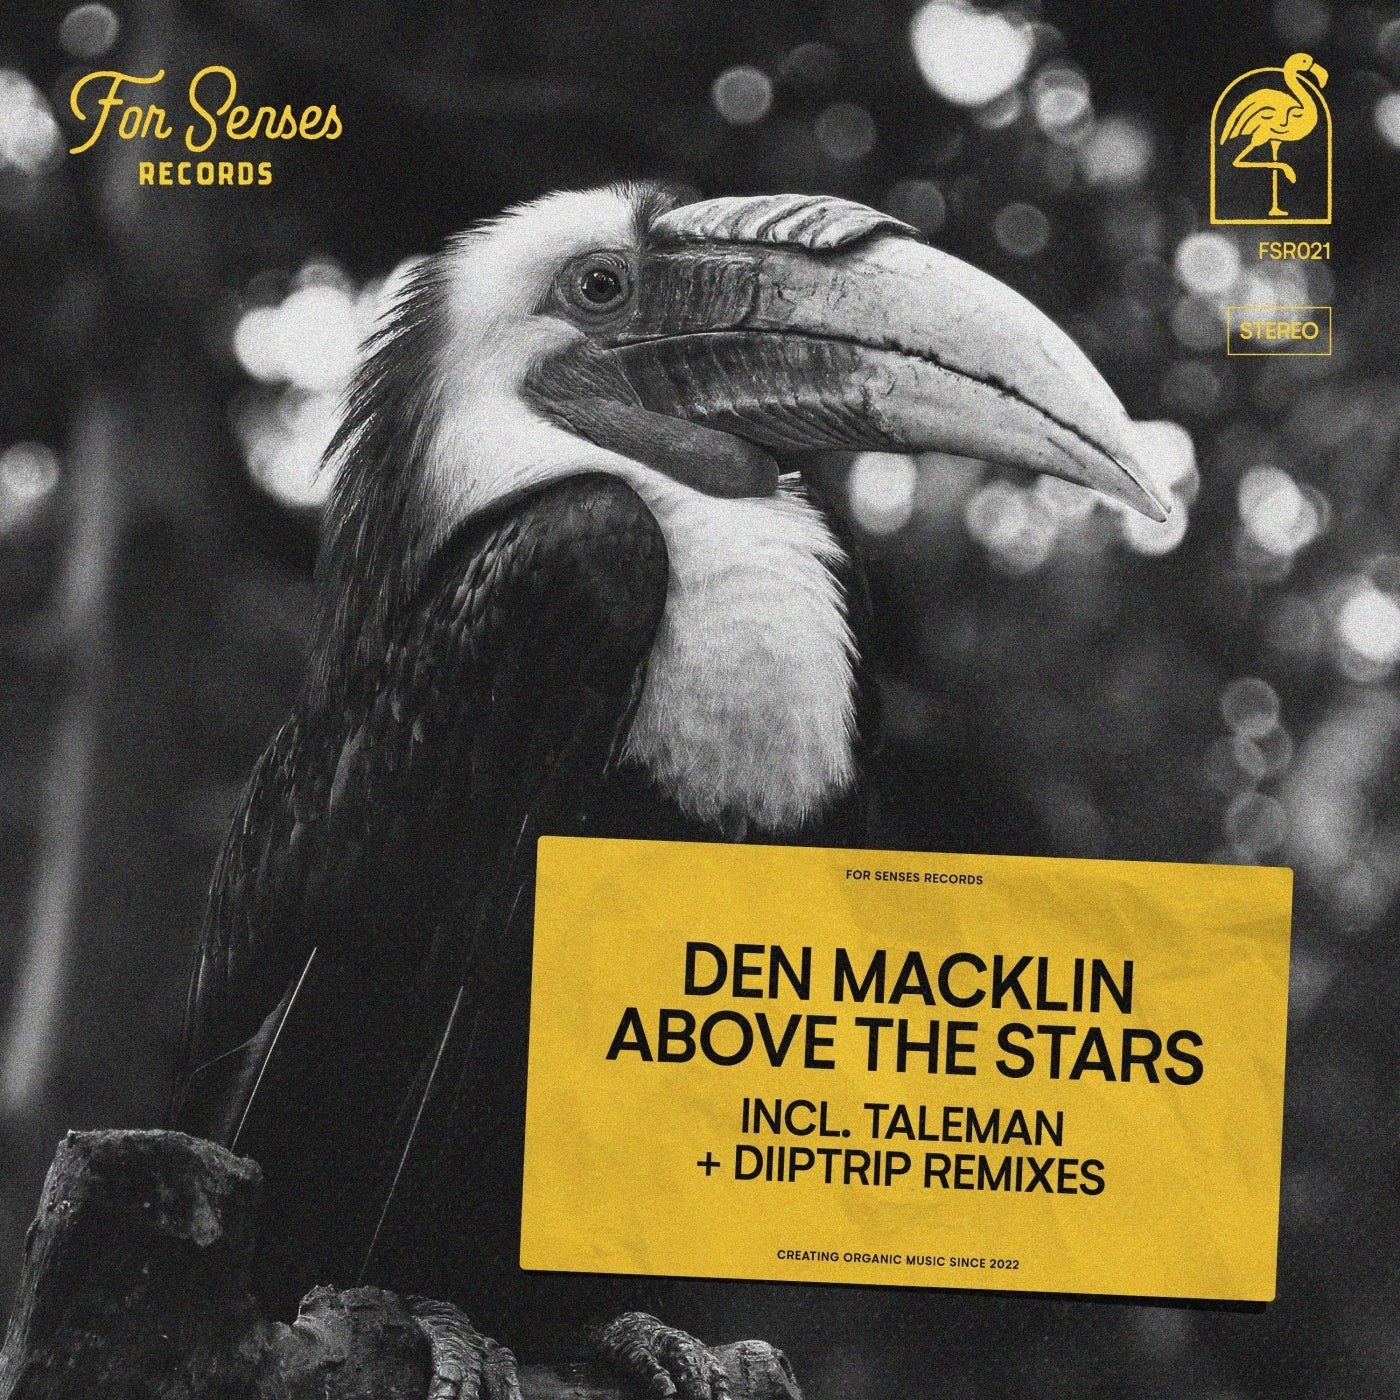 Den Macklin, Taleman – Above the Stars [FSR021]